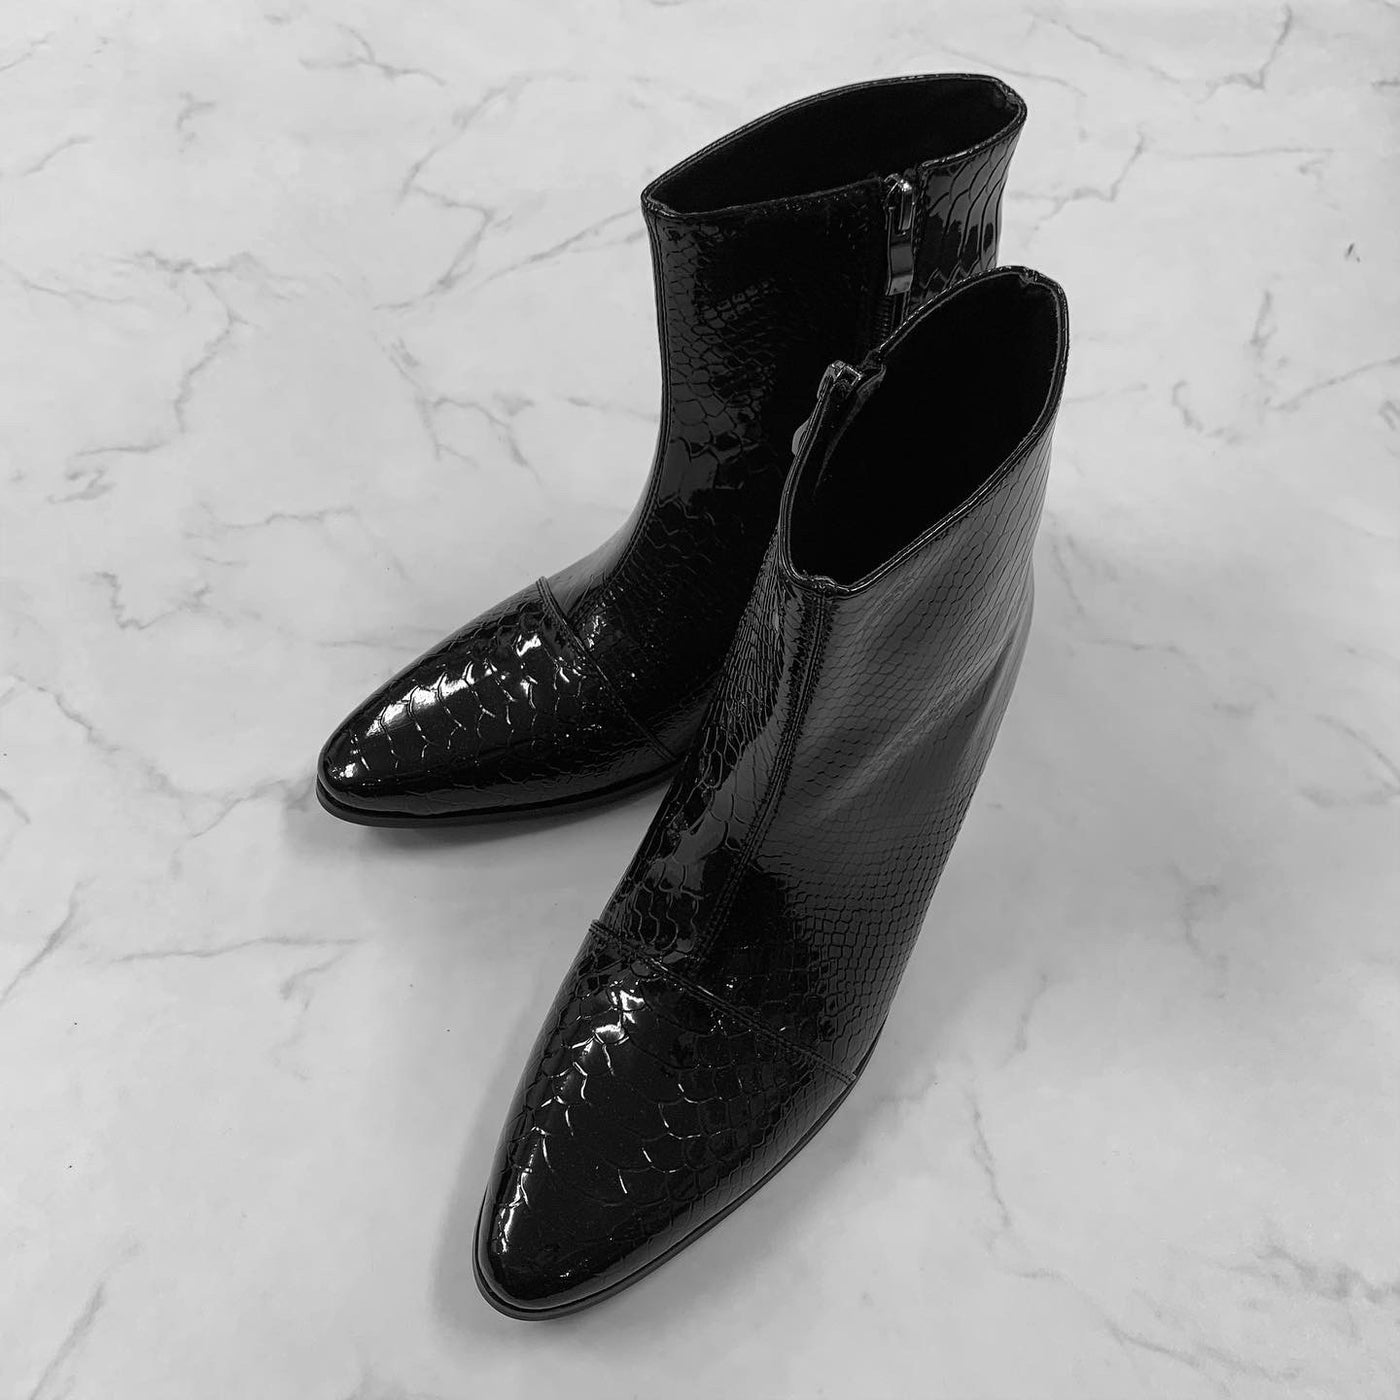 [Instant delivery]"Croco"60mm heel boots